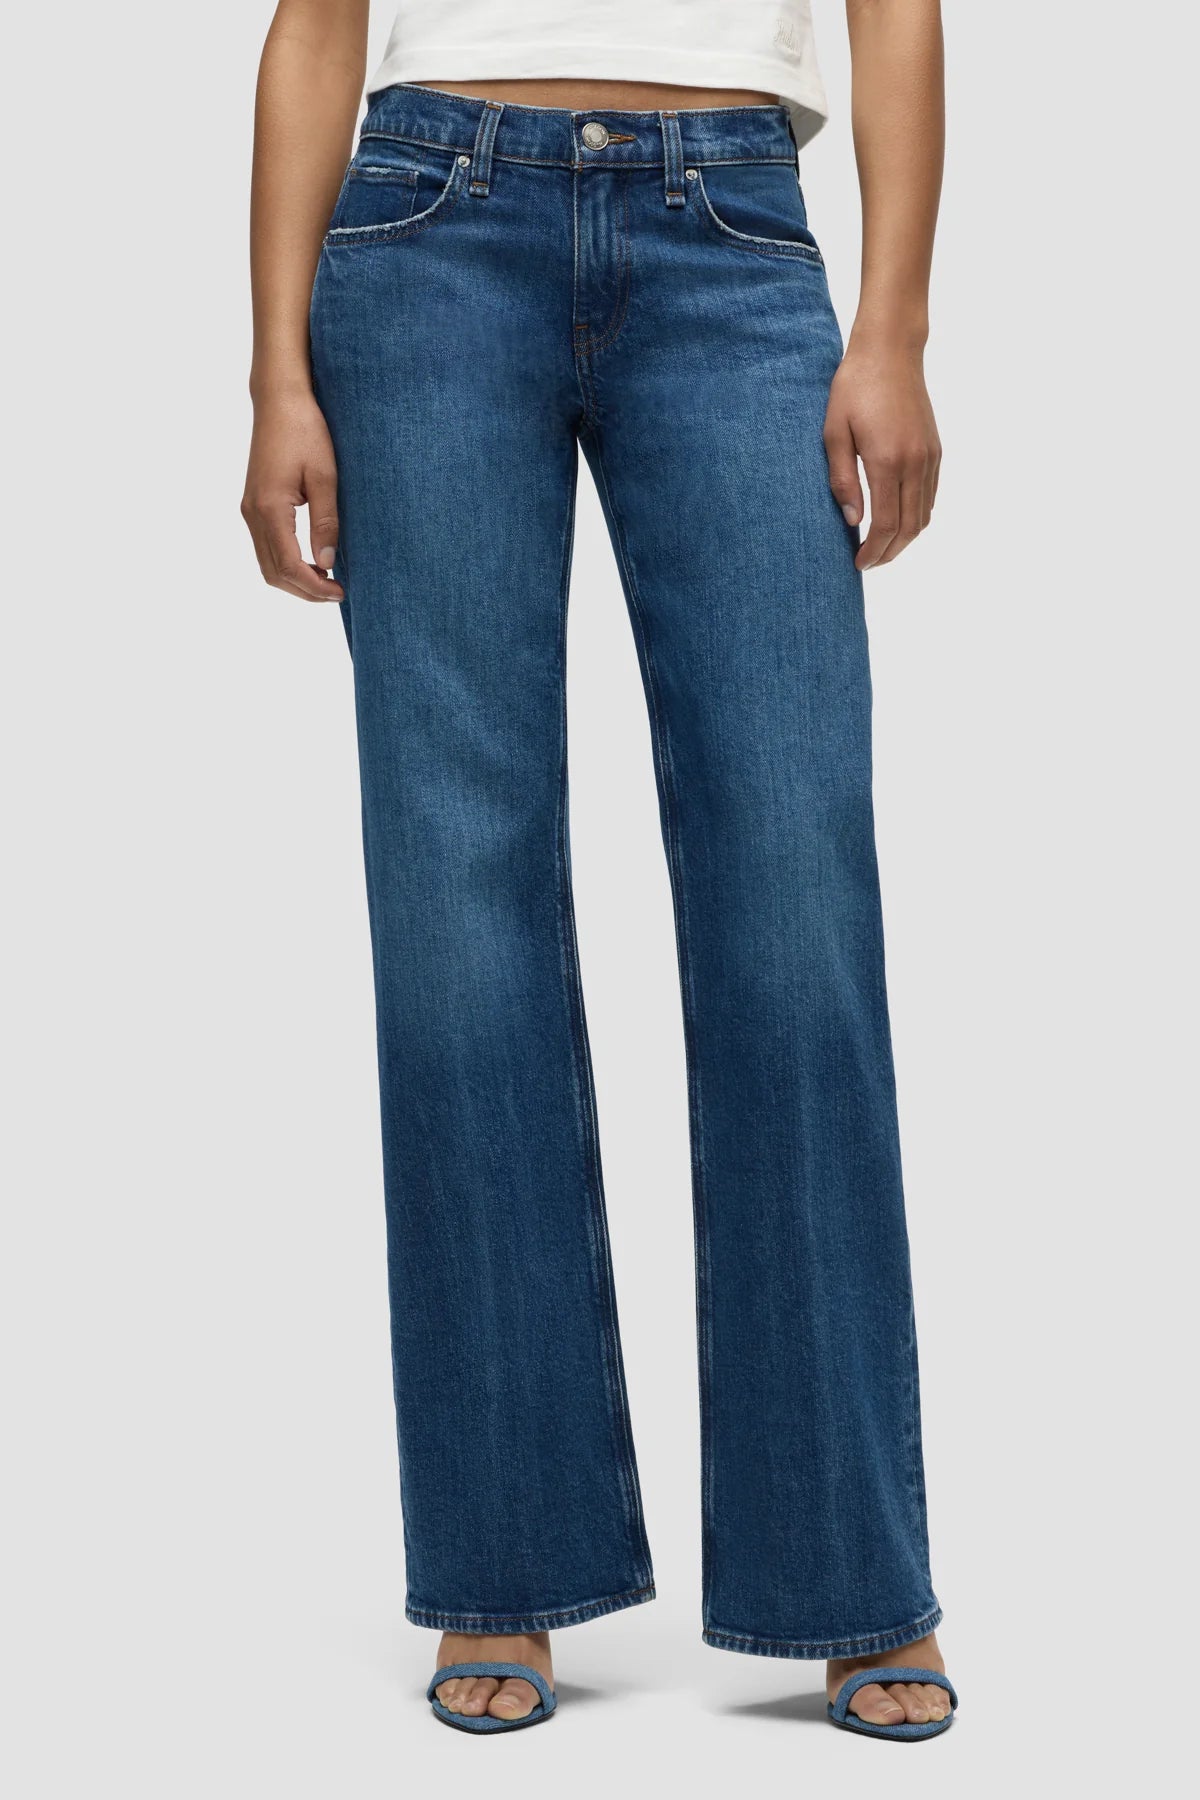 Kelli Low Rise Straight Jean